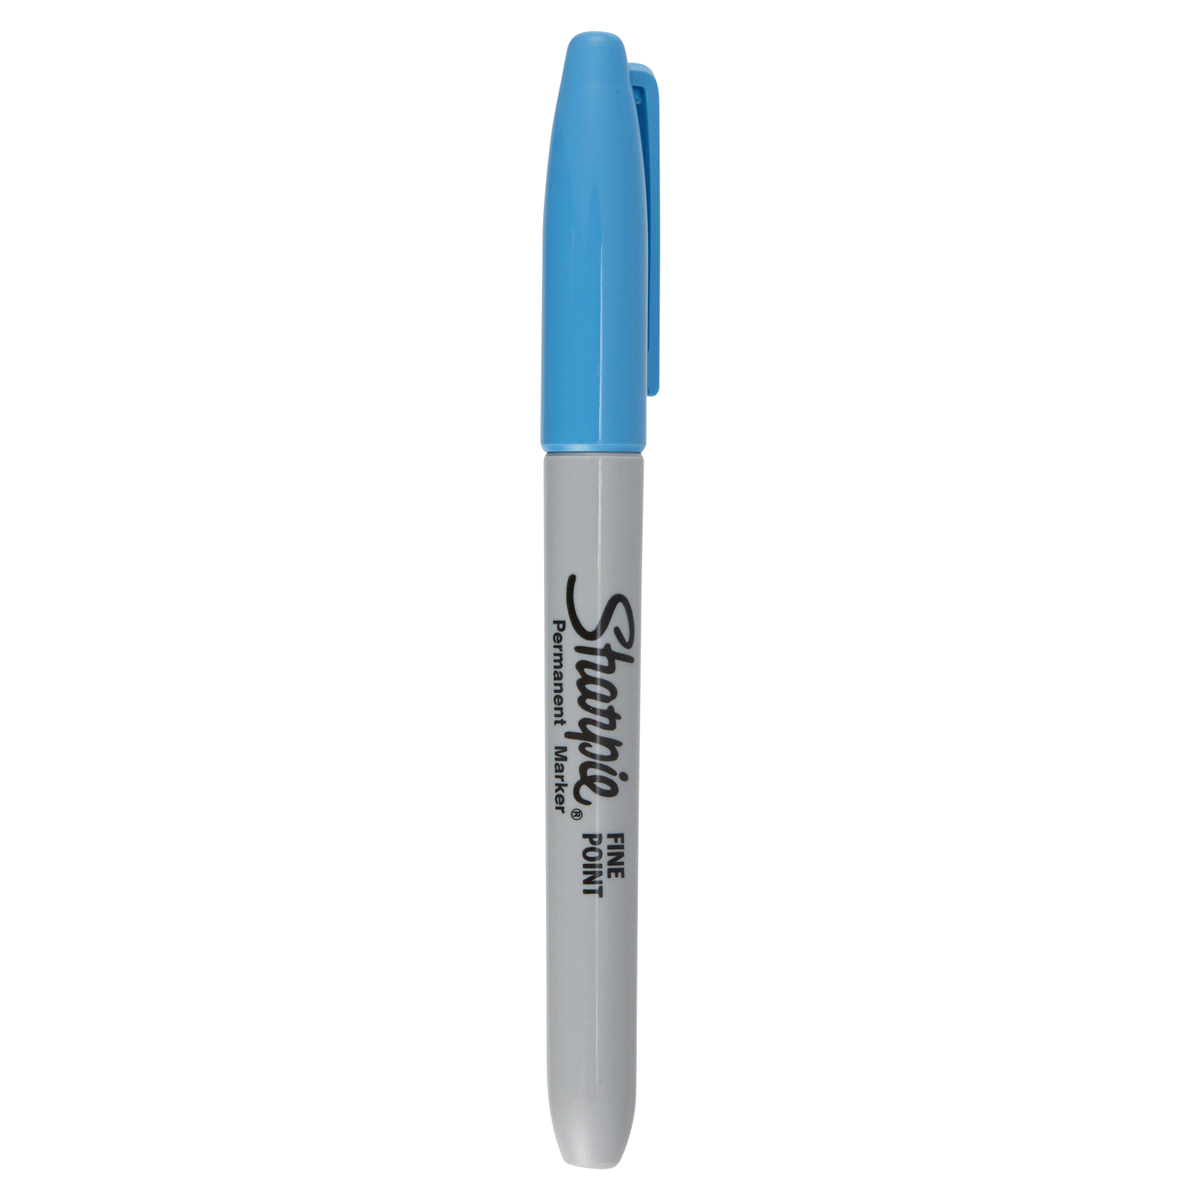 Sharpie • Fine Point • Permanent Markers • Colors - Turquoise Blue by Sharpie - K. A. Artist Shop